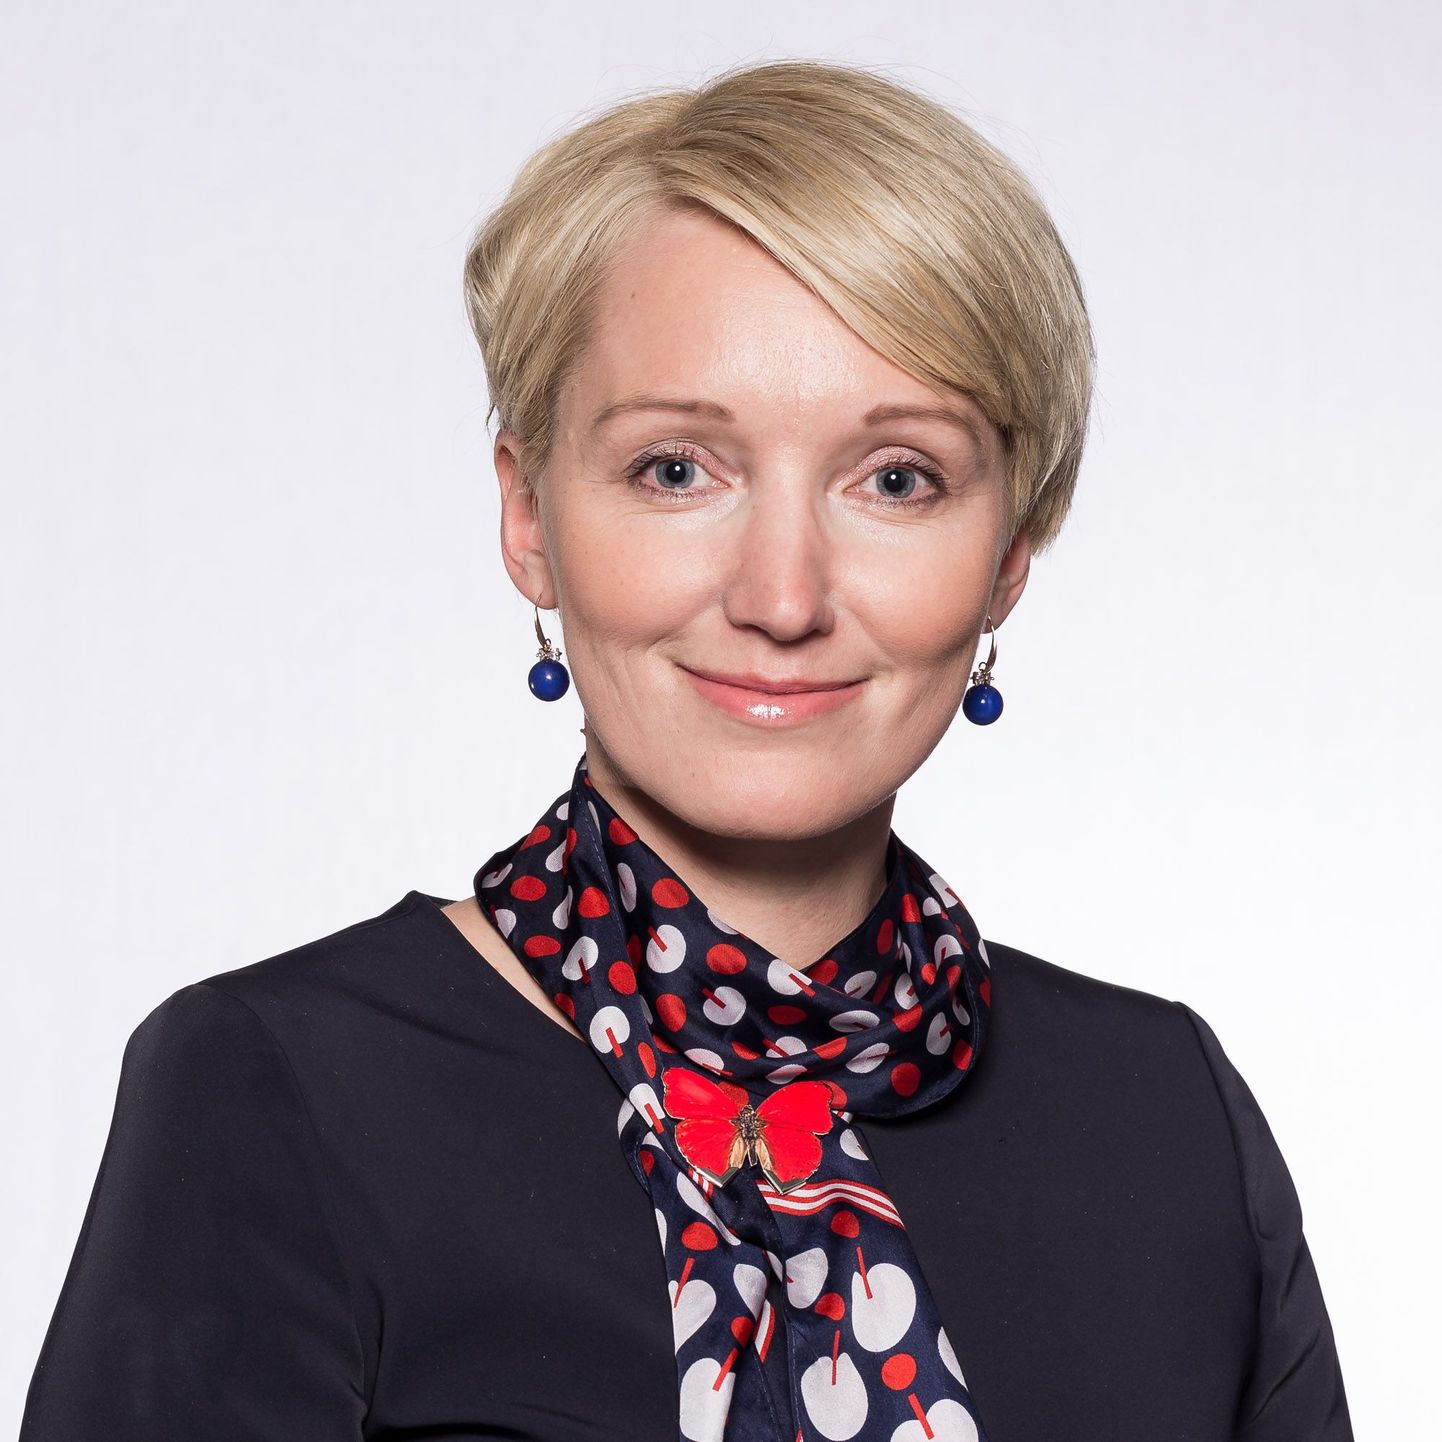 Ulla Preeden